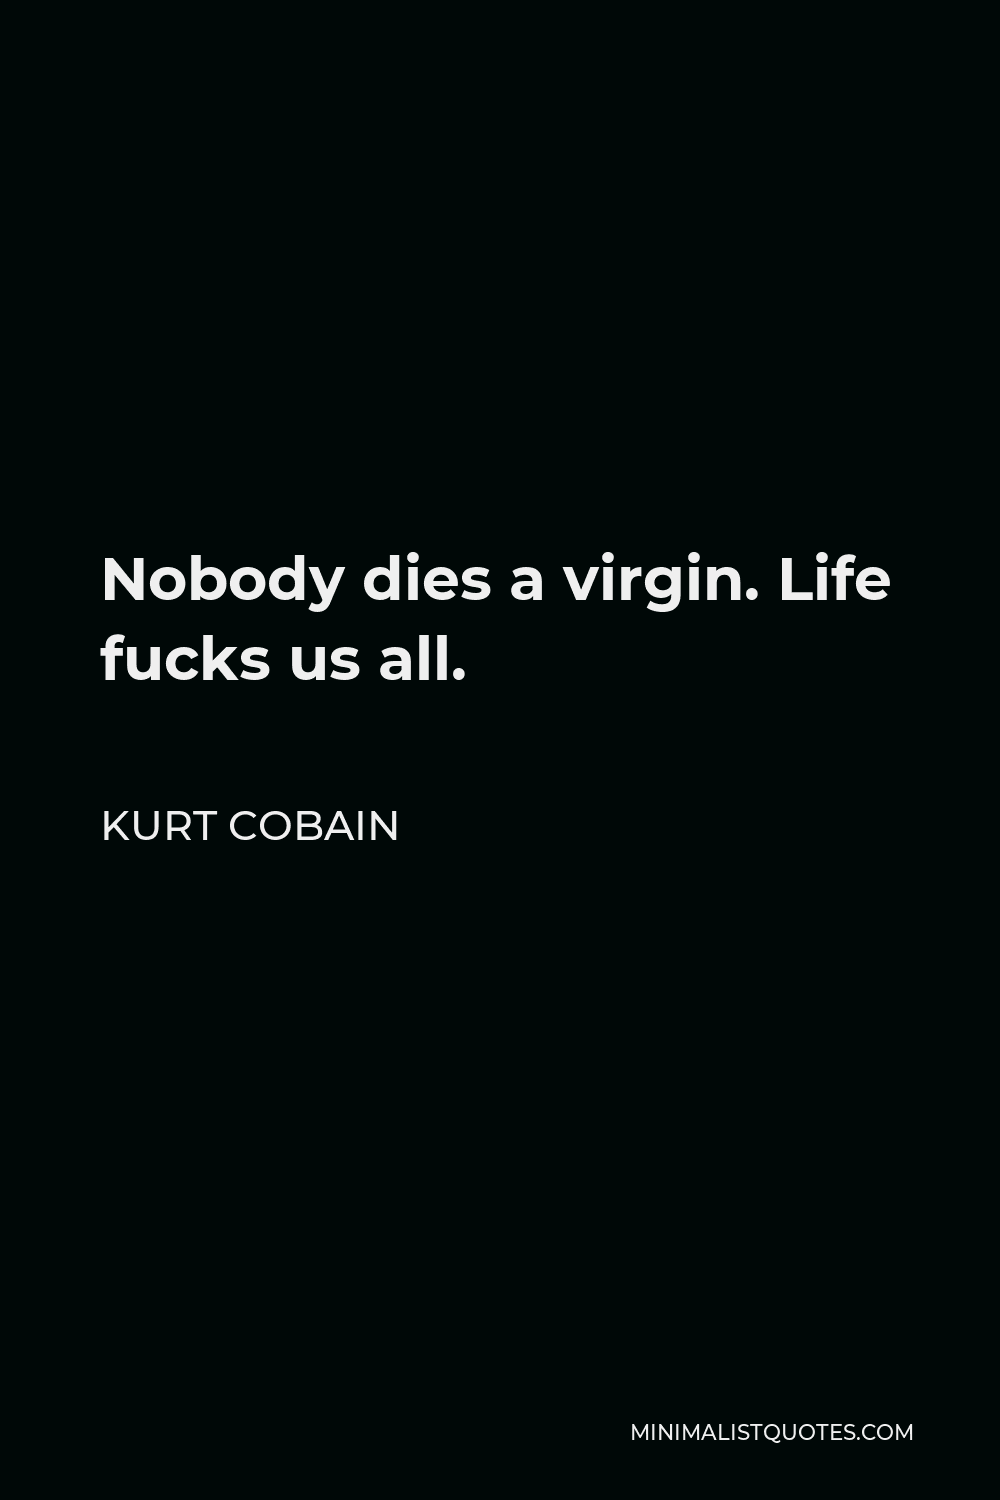 Kurt Cobain Quote - Nobody dies a virgin. Life fucks us all.